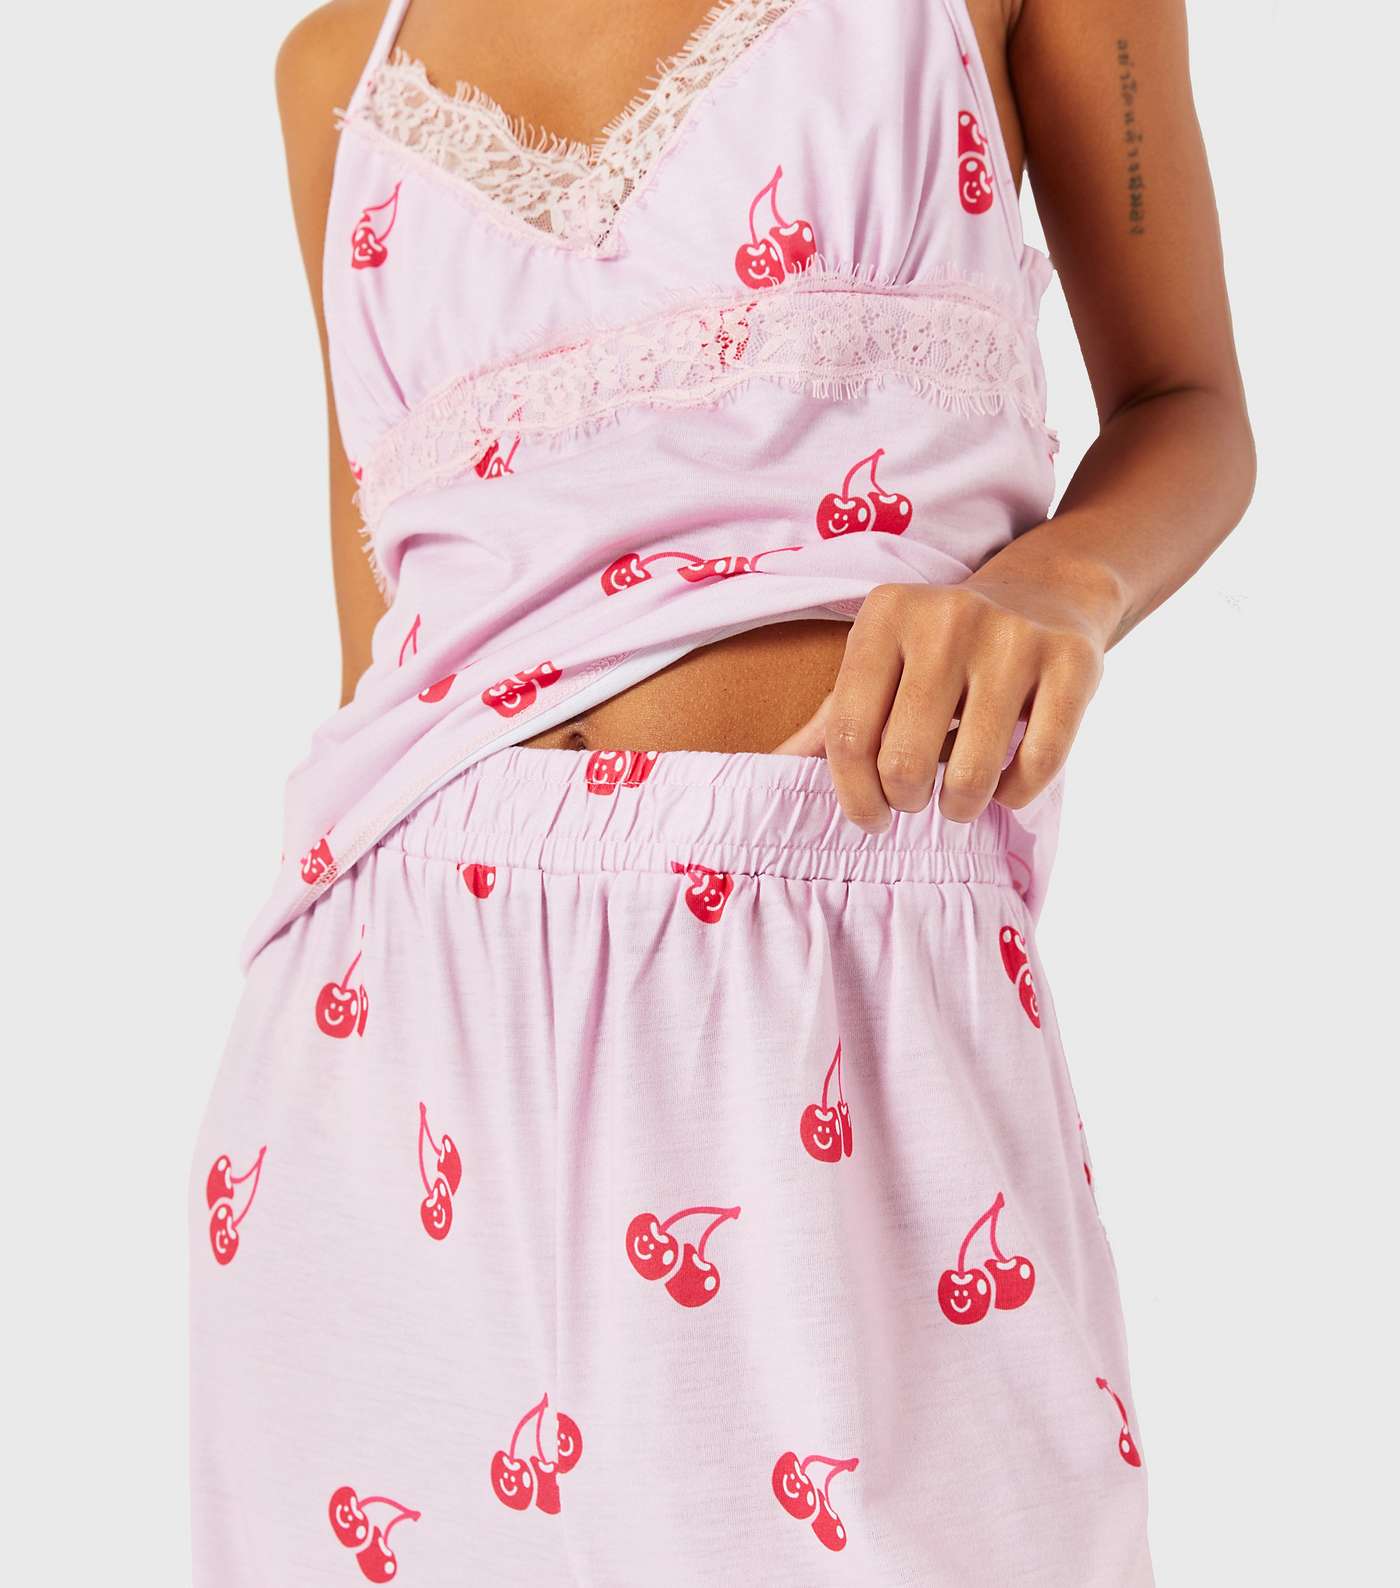 Skinnydip Pink Lace Trim Pyjama Set with Cherry Print Image 4